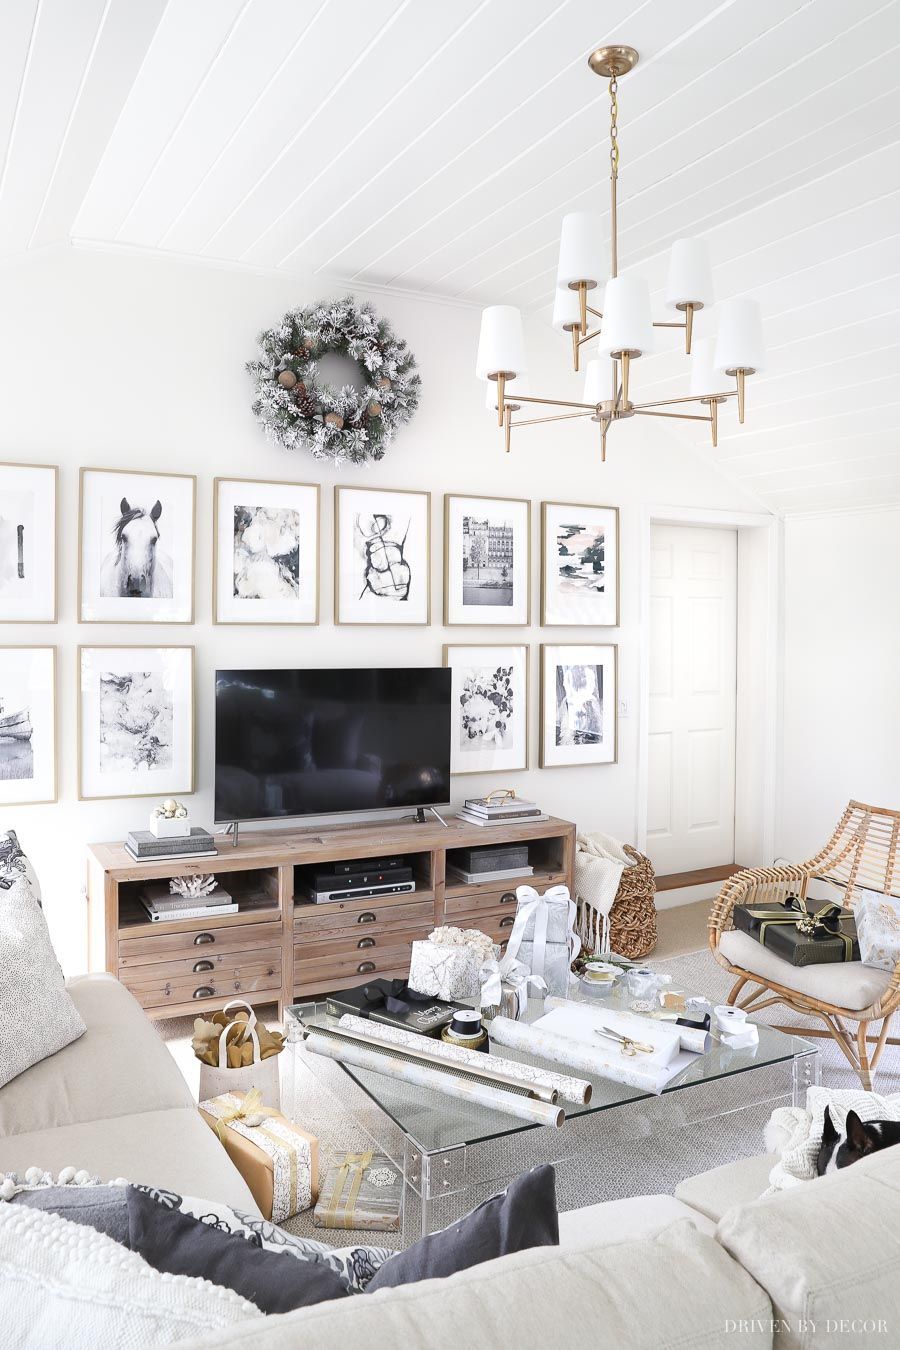 39 Beautiful Family Room Design Ideas - HMDCRTN